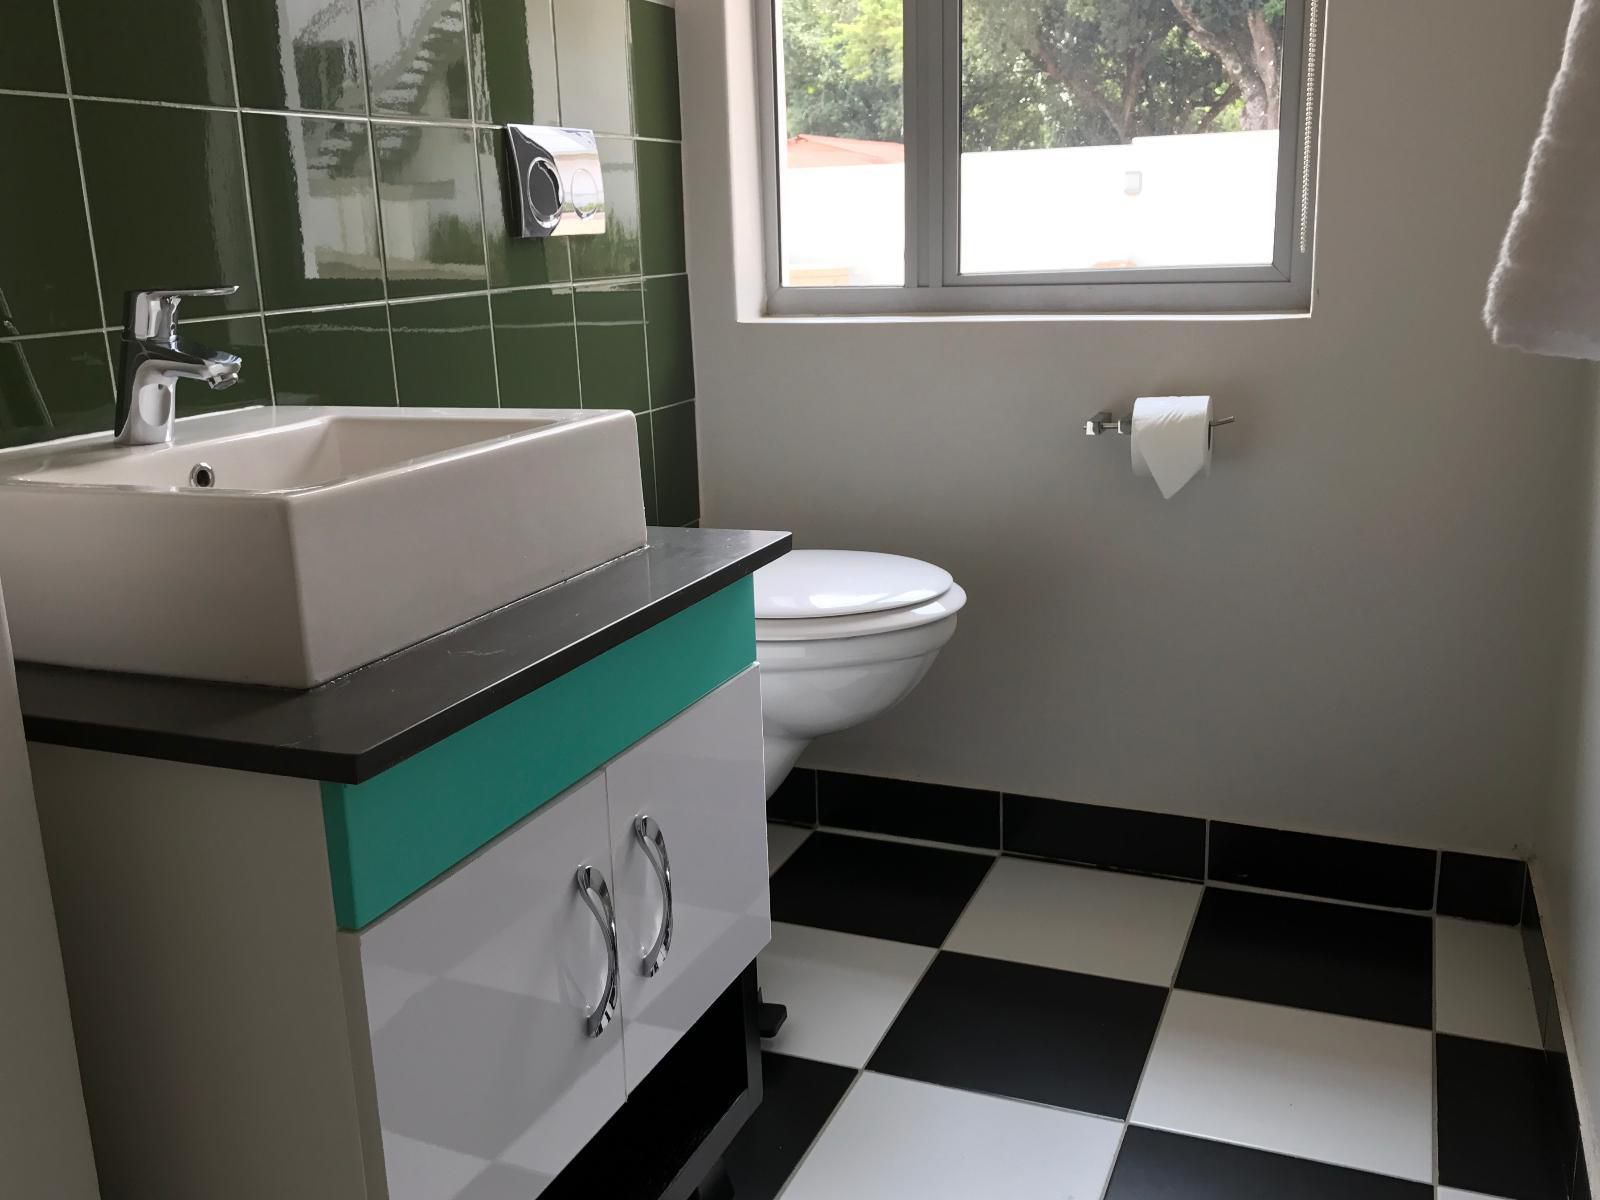 Hptwelve Accommodation Sonheuwel Central Nelspruit Mpumalanga South Africa Unsaturated, Bathroom